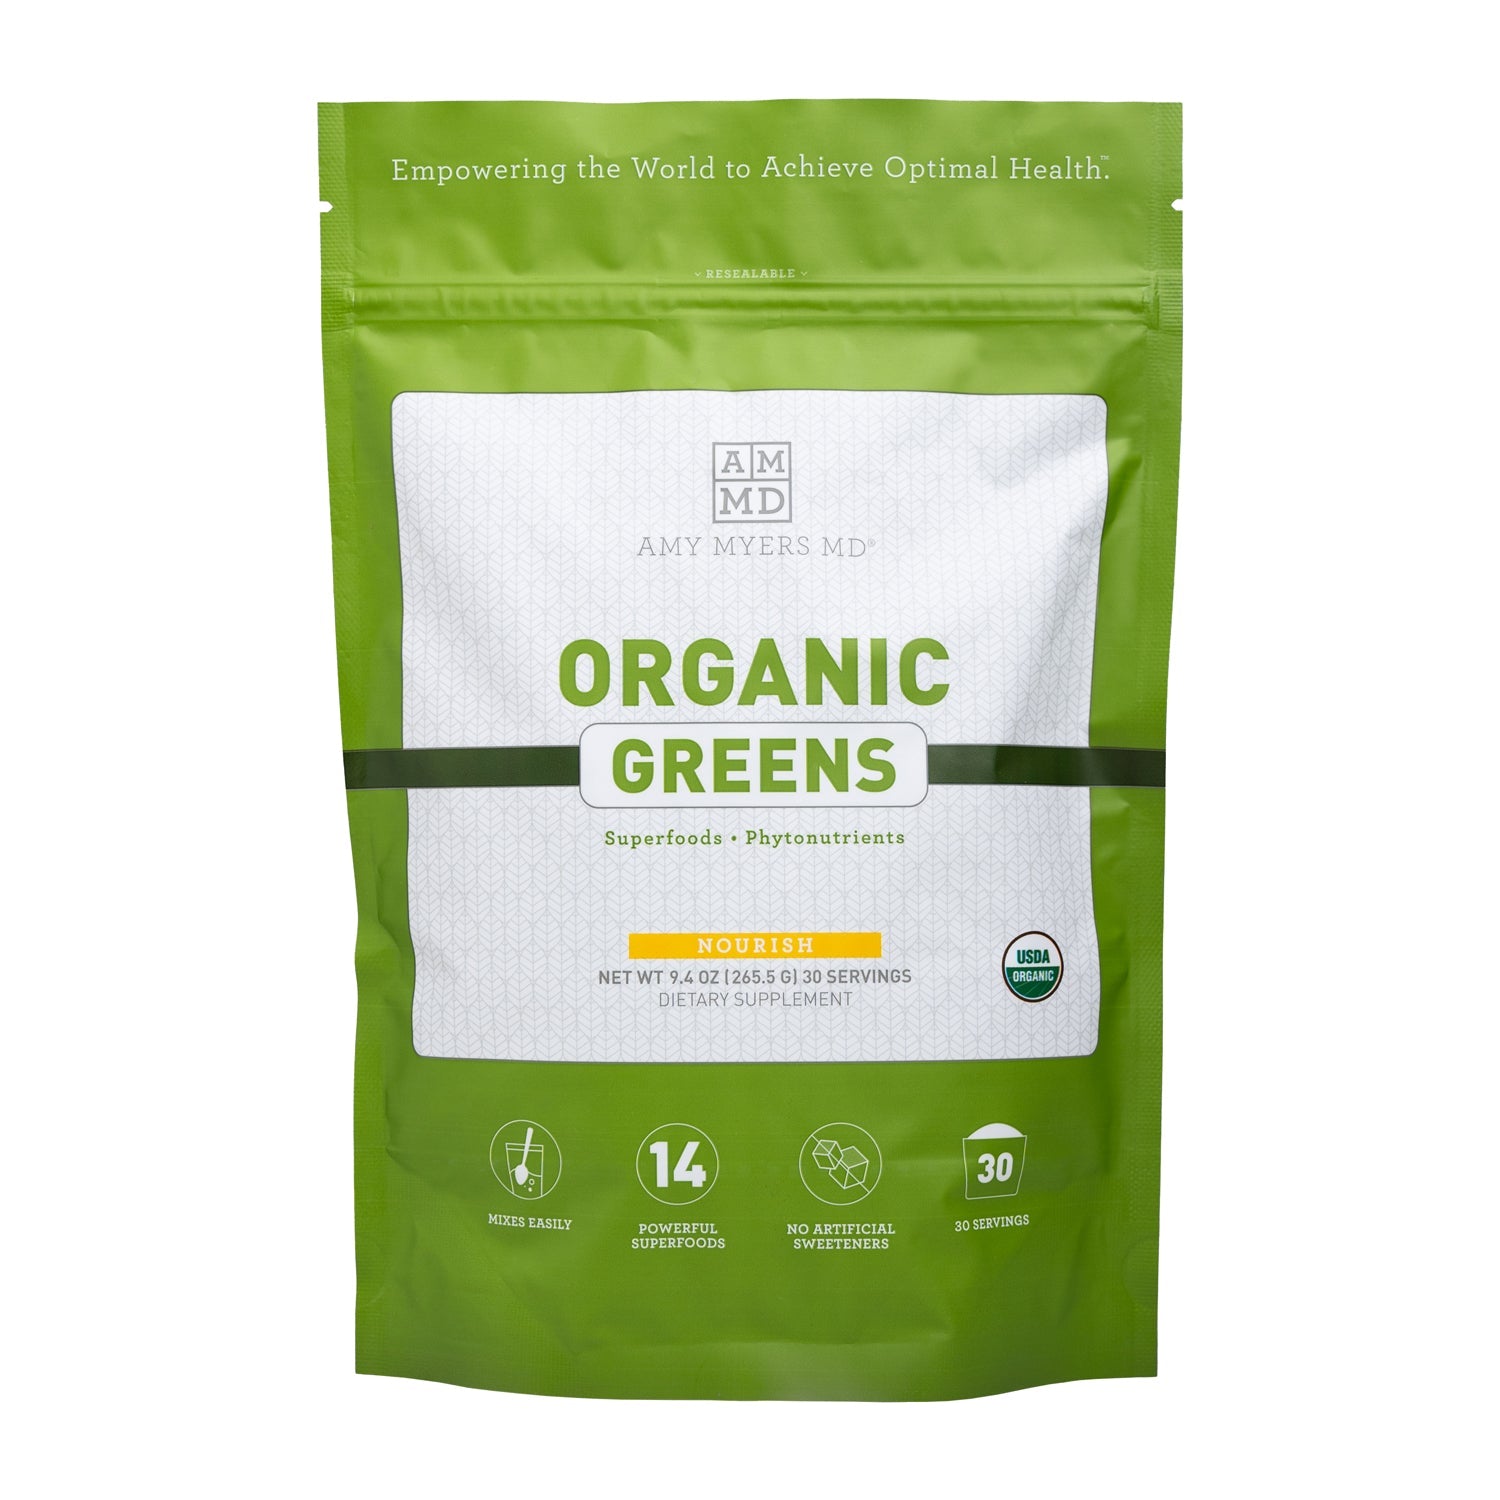 Organic Greens - 250g | Amy Myers MD